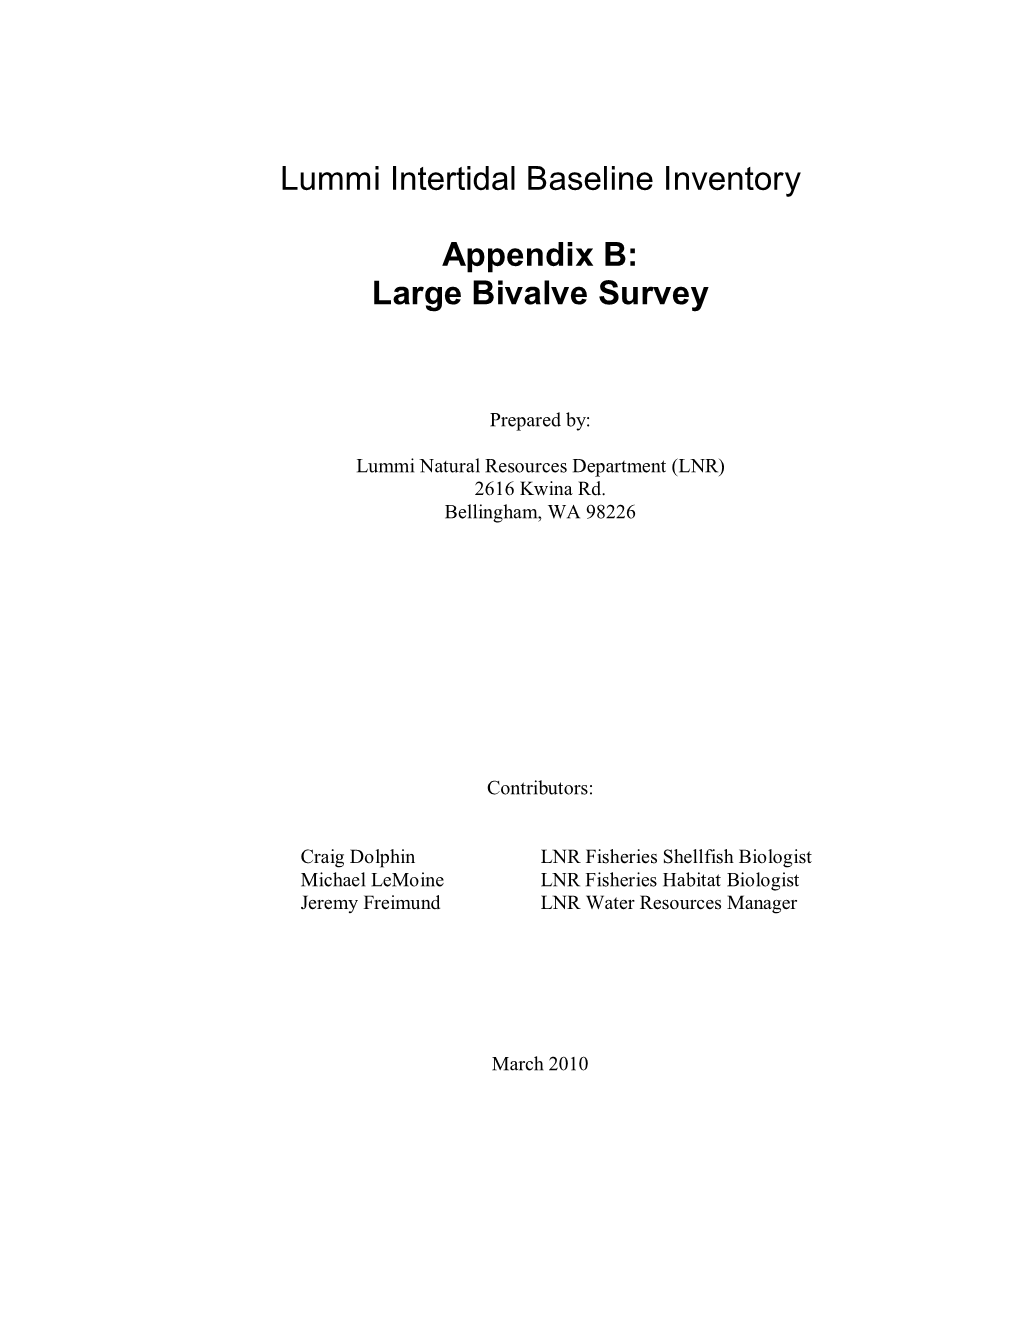 Lummi Intertidal Baseline Inventory Appendix B: Large Bivalve Survey